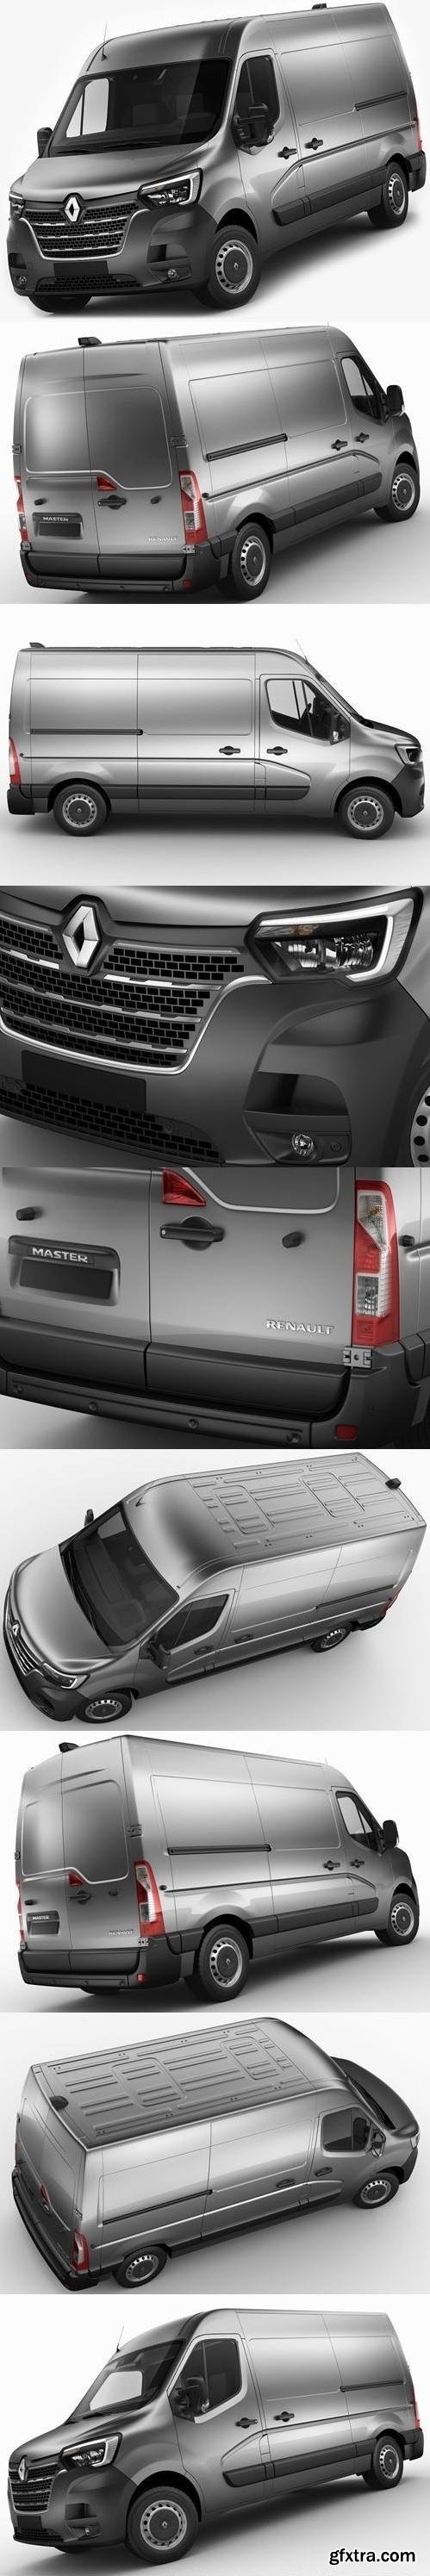 Cgtrader - Renault Master Van L2H2 2019 3D model